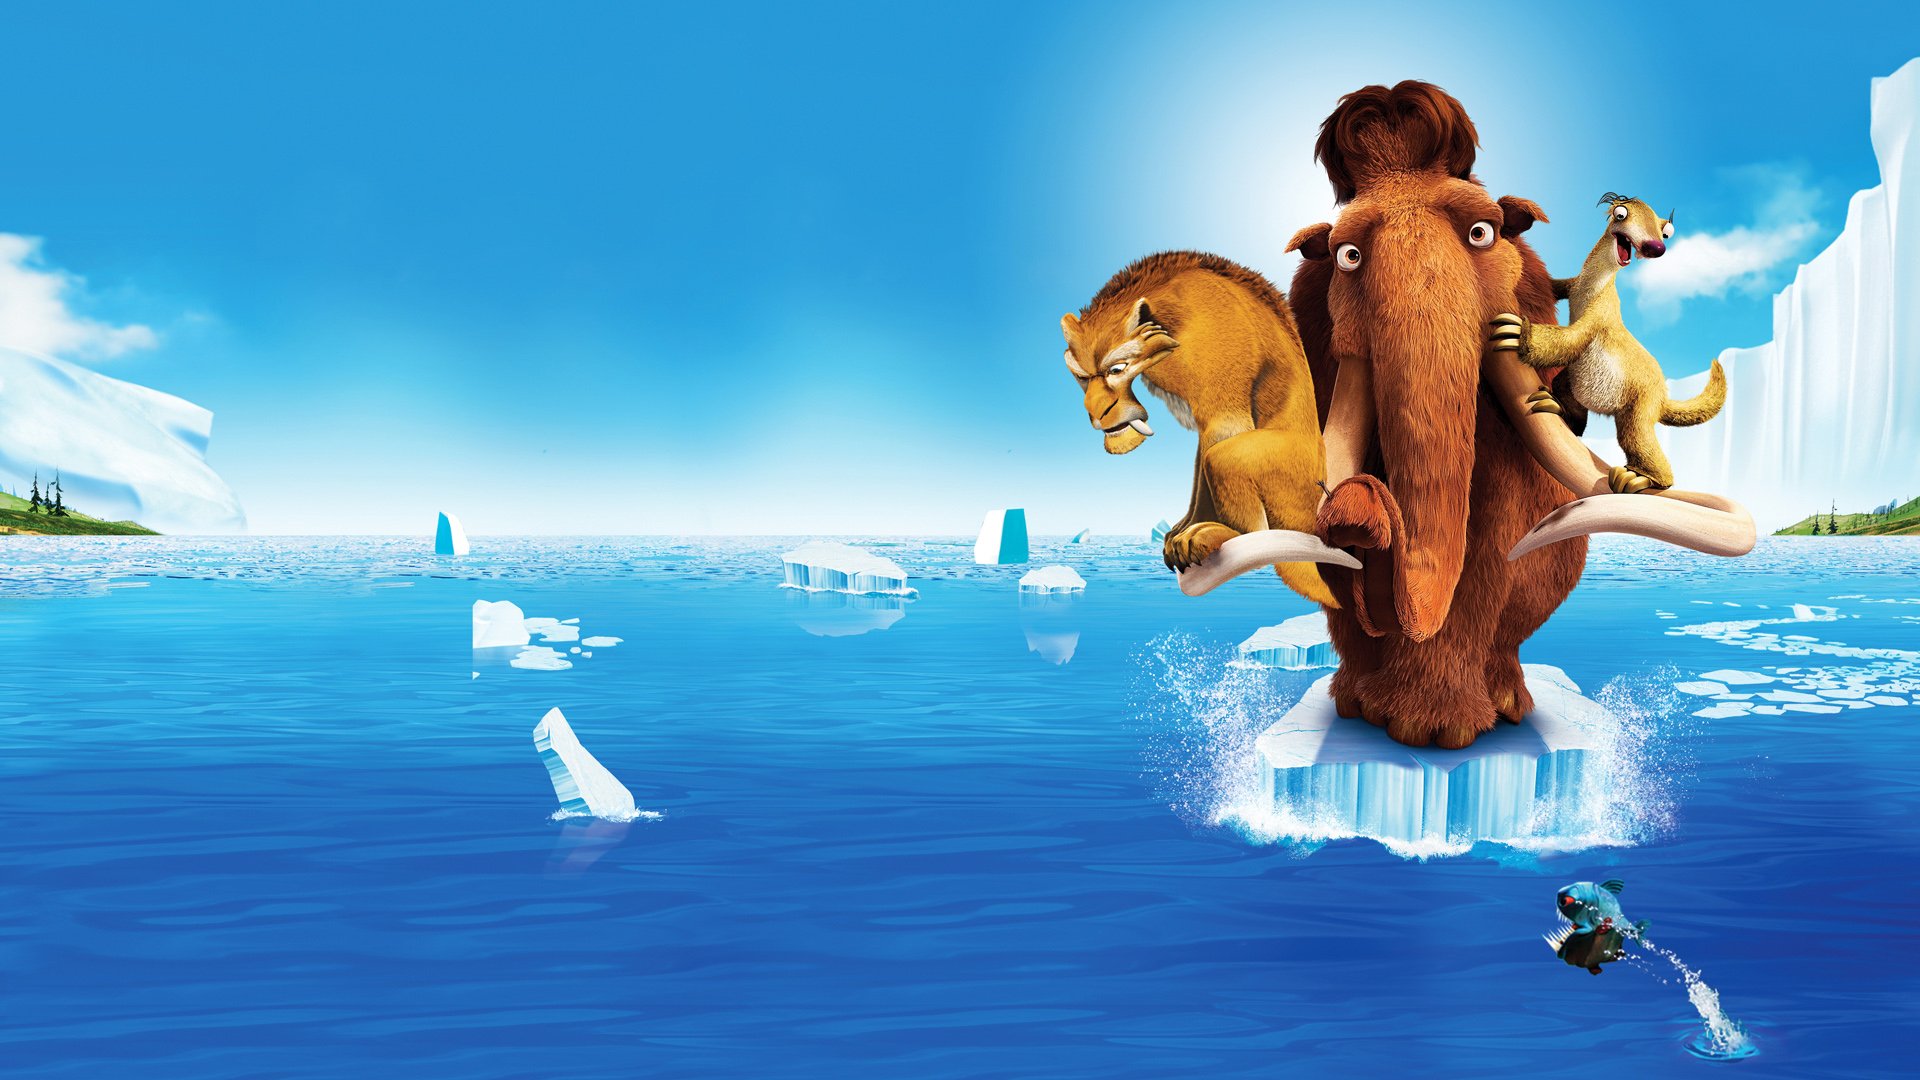 ice age wallpaper,fun,leisure,animation,ocean,animated cartoon